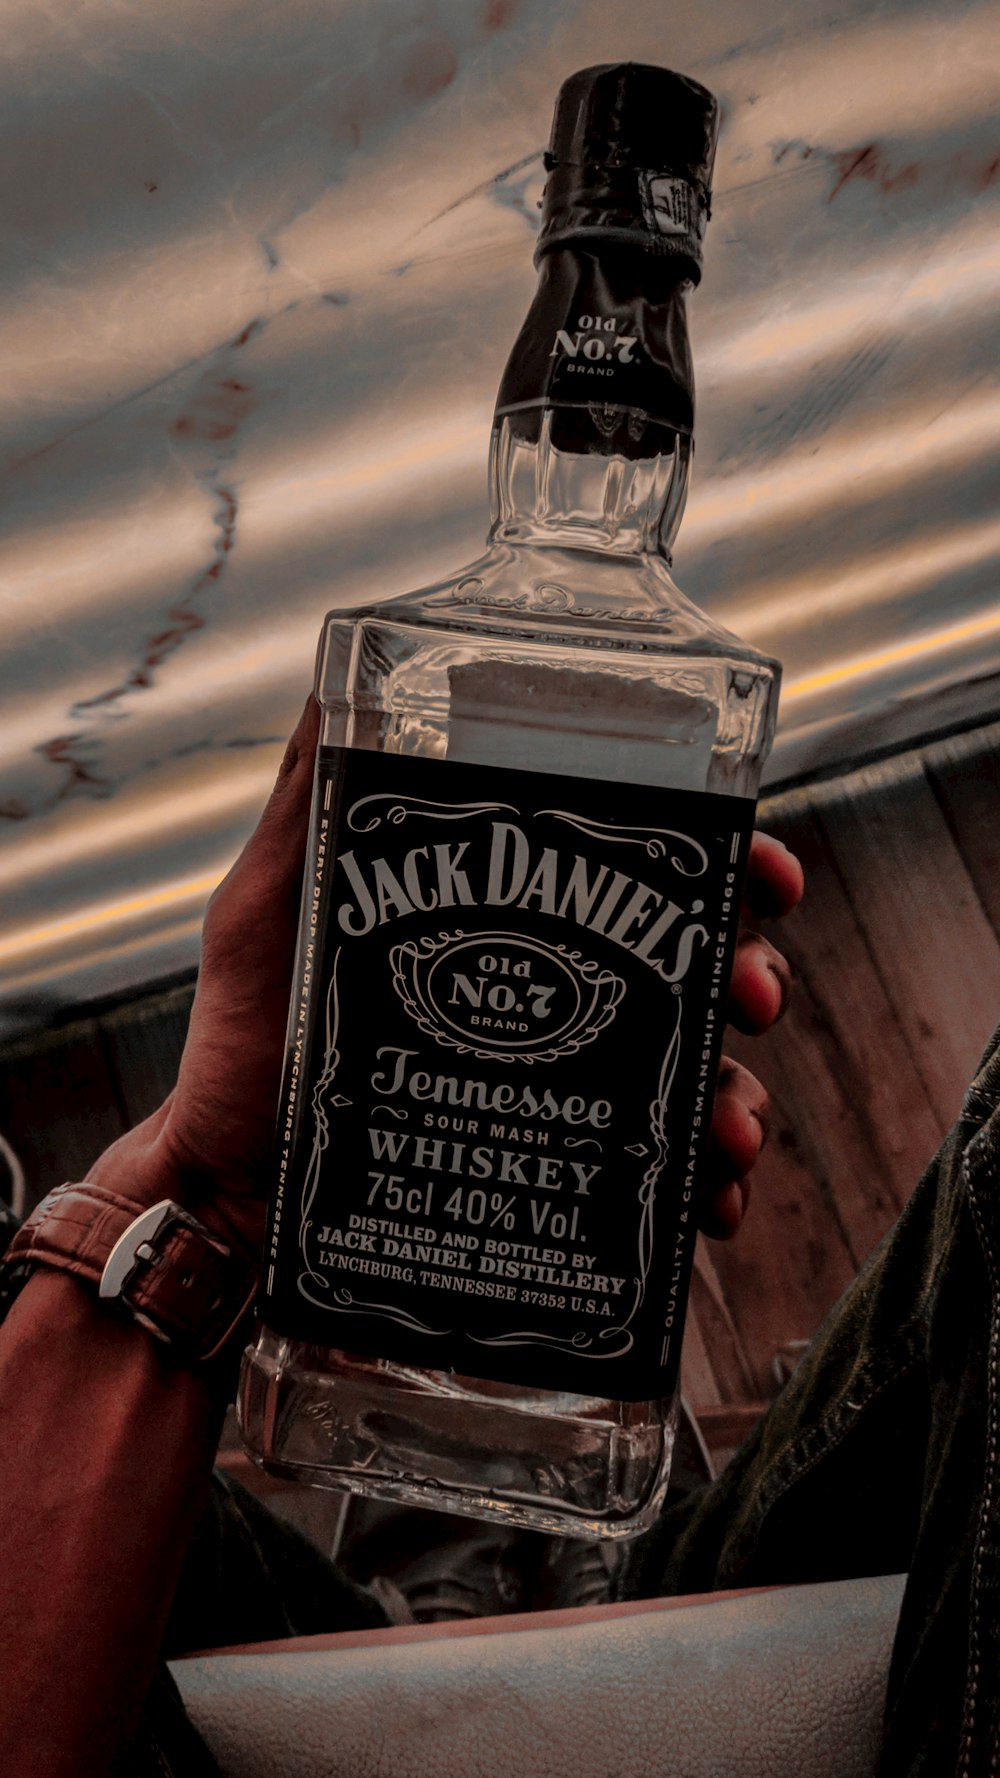 Jack Daniels Tennessee whiskey